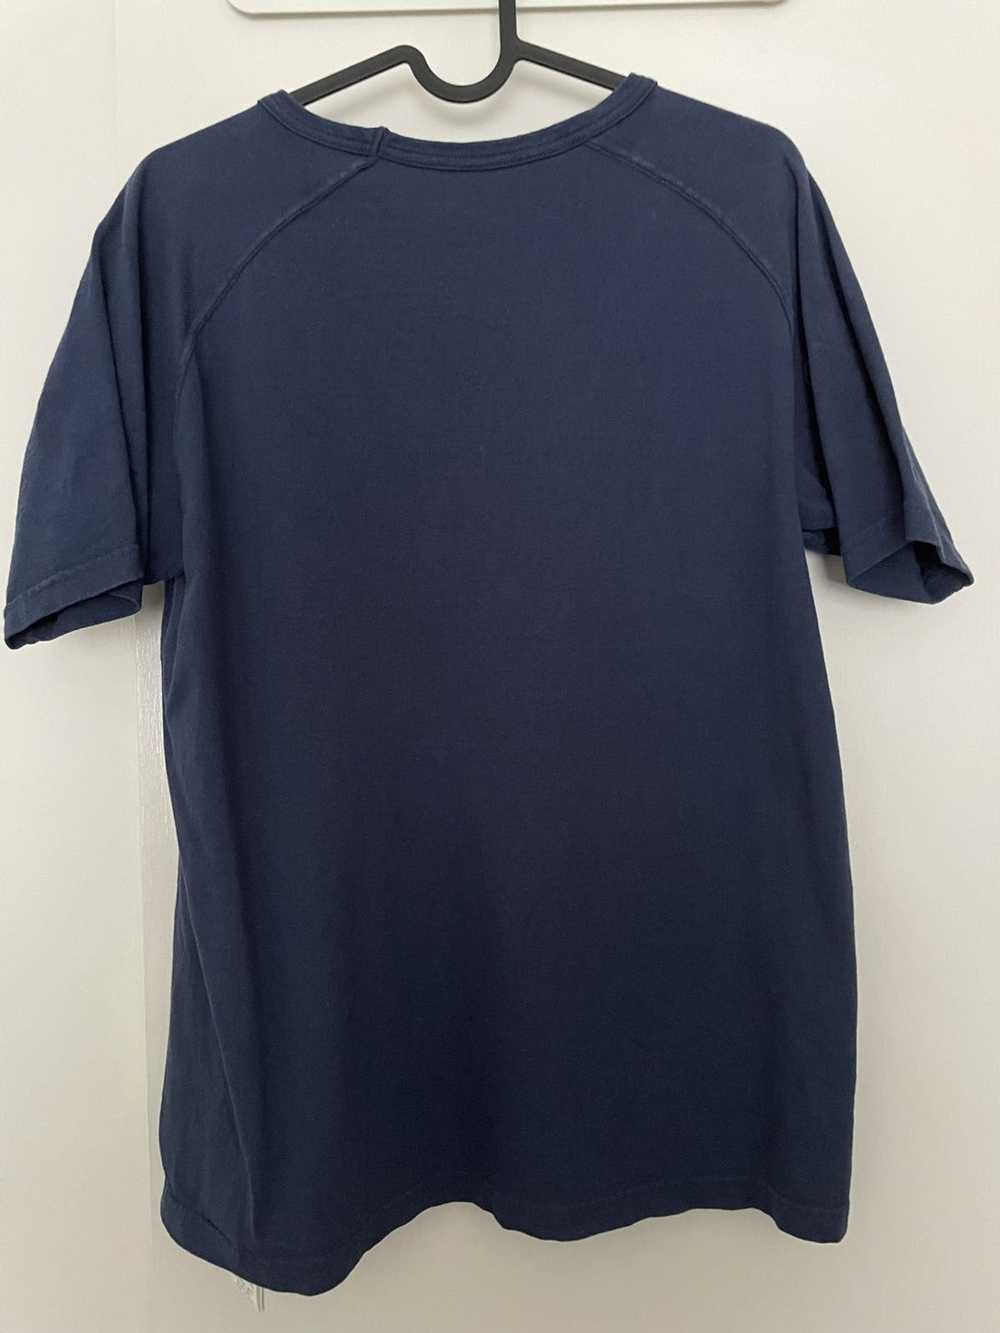 Nigel Cabourn Japan Mainline Basic T-Shirt - image 2